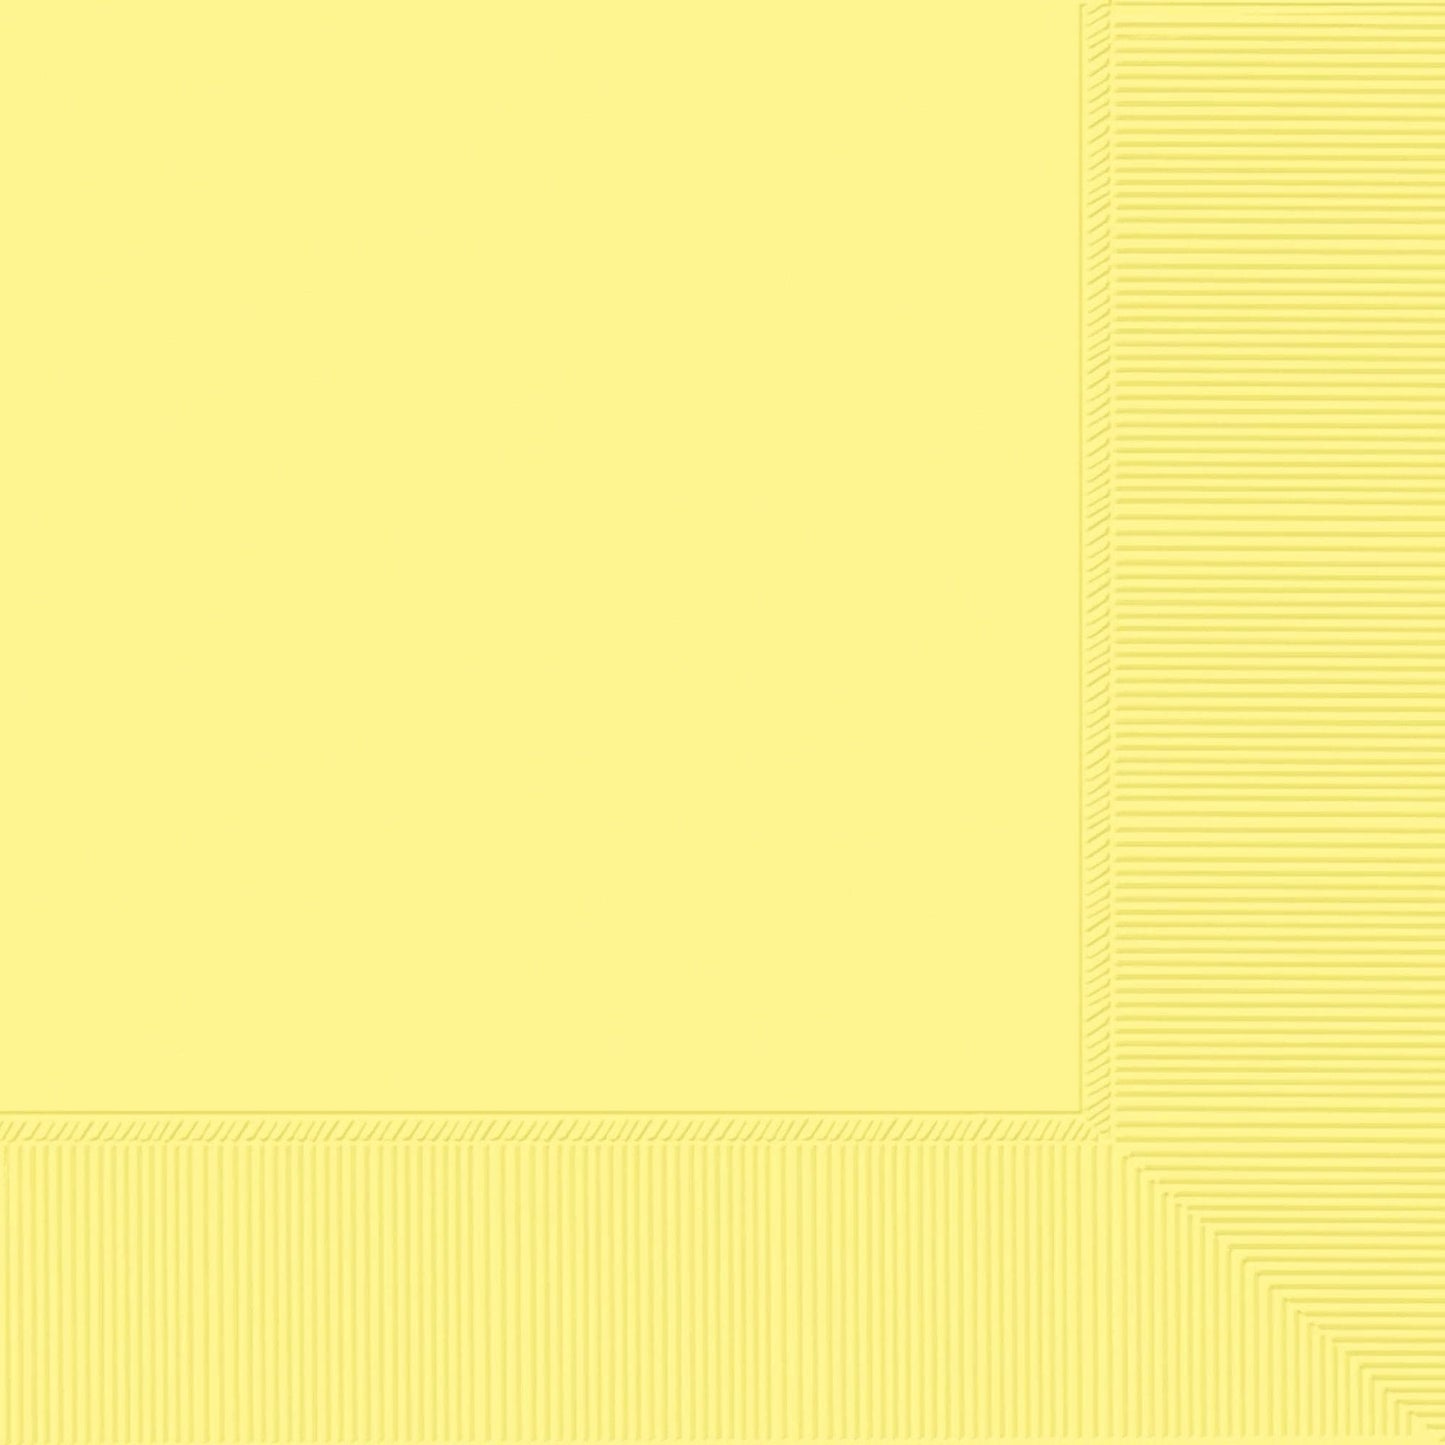 Light Yellow Luncheon Napkins 40 ct.  8" x 8"